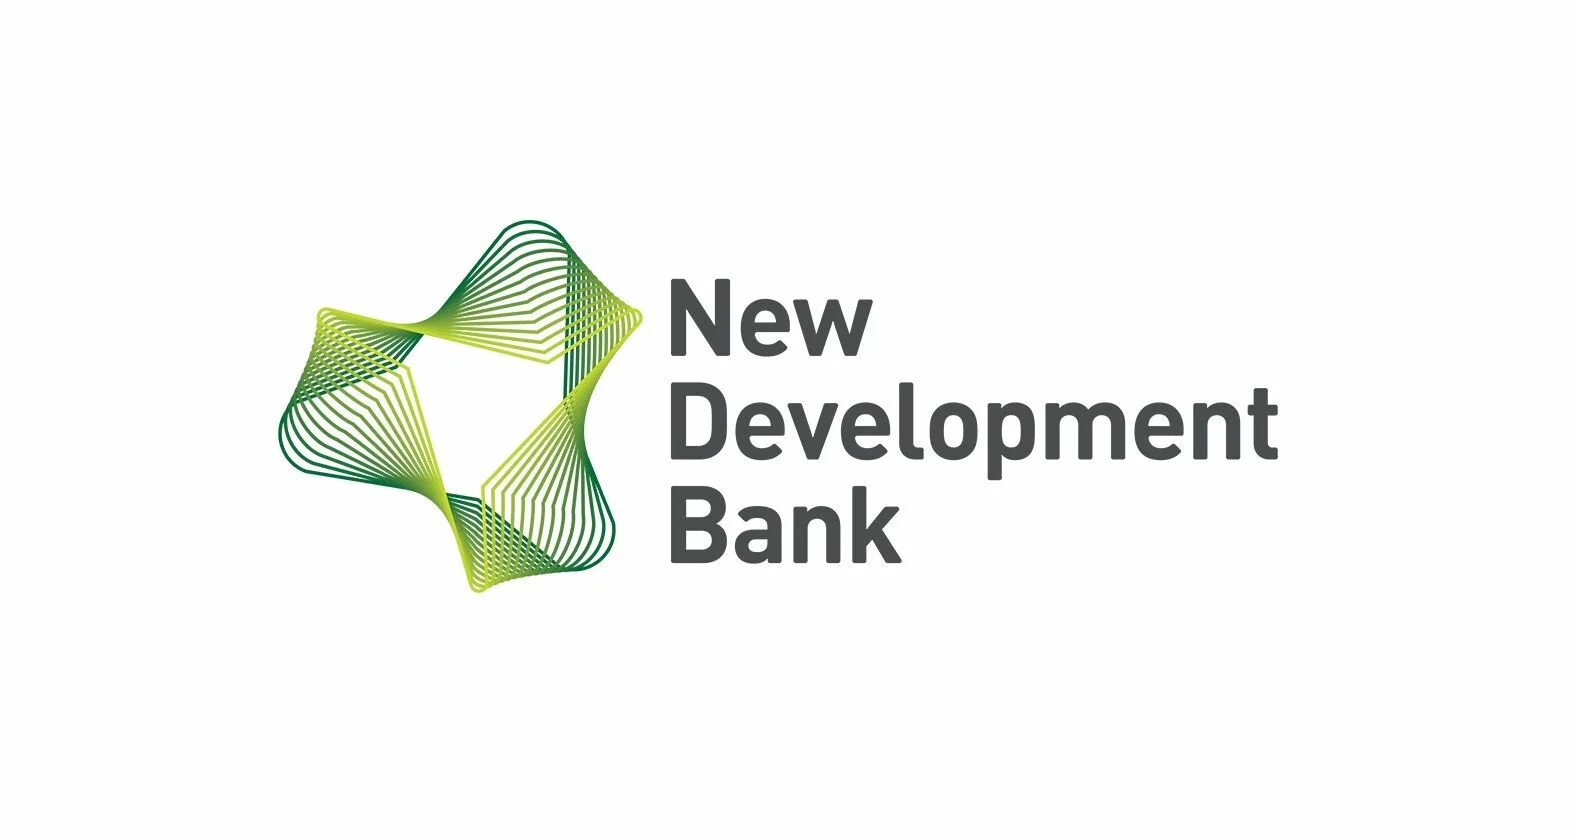 Банк брикс. Банк развития БРИКС. Новый банк развития. Новый банк развития эмблема. Логотип нового банка развития БРИКС.